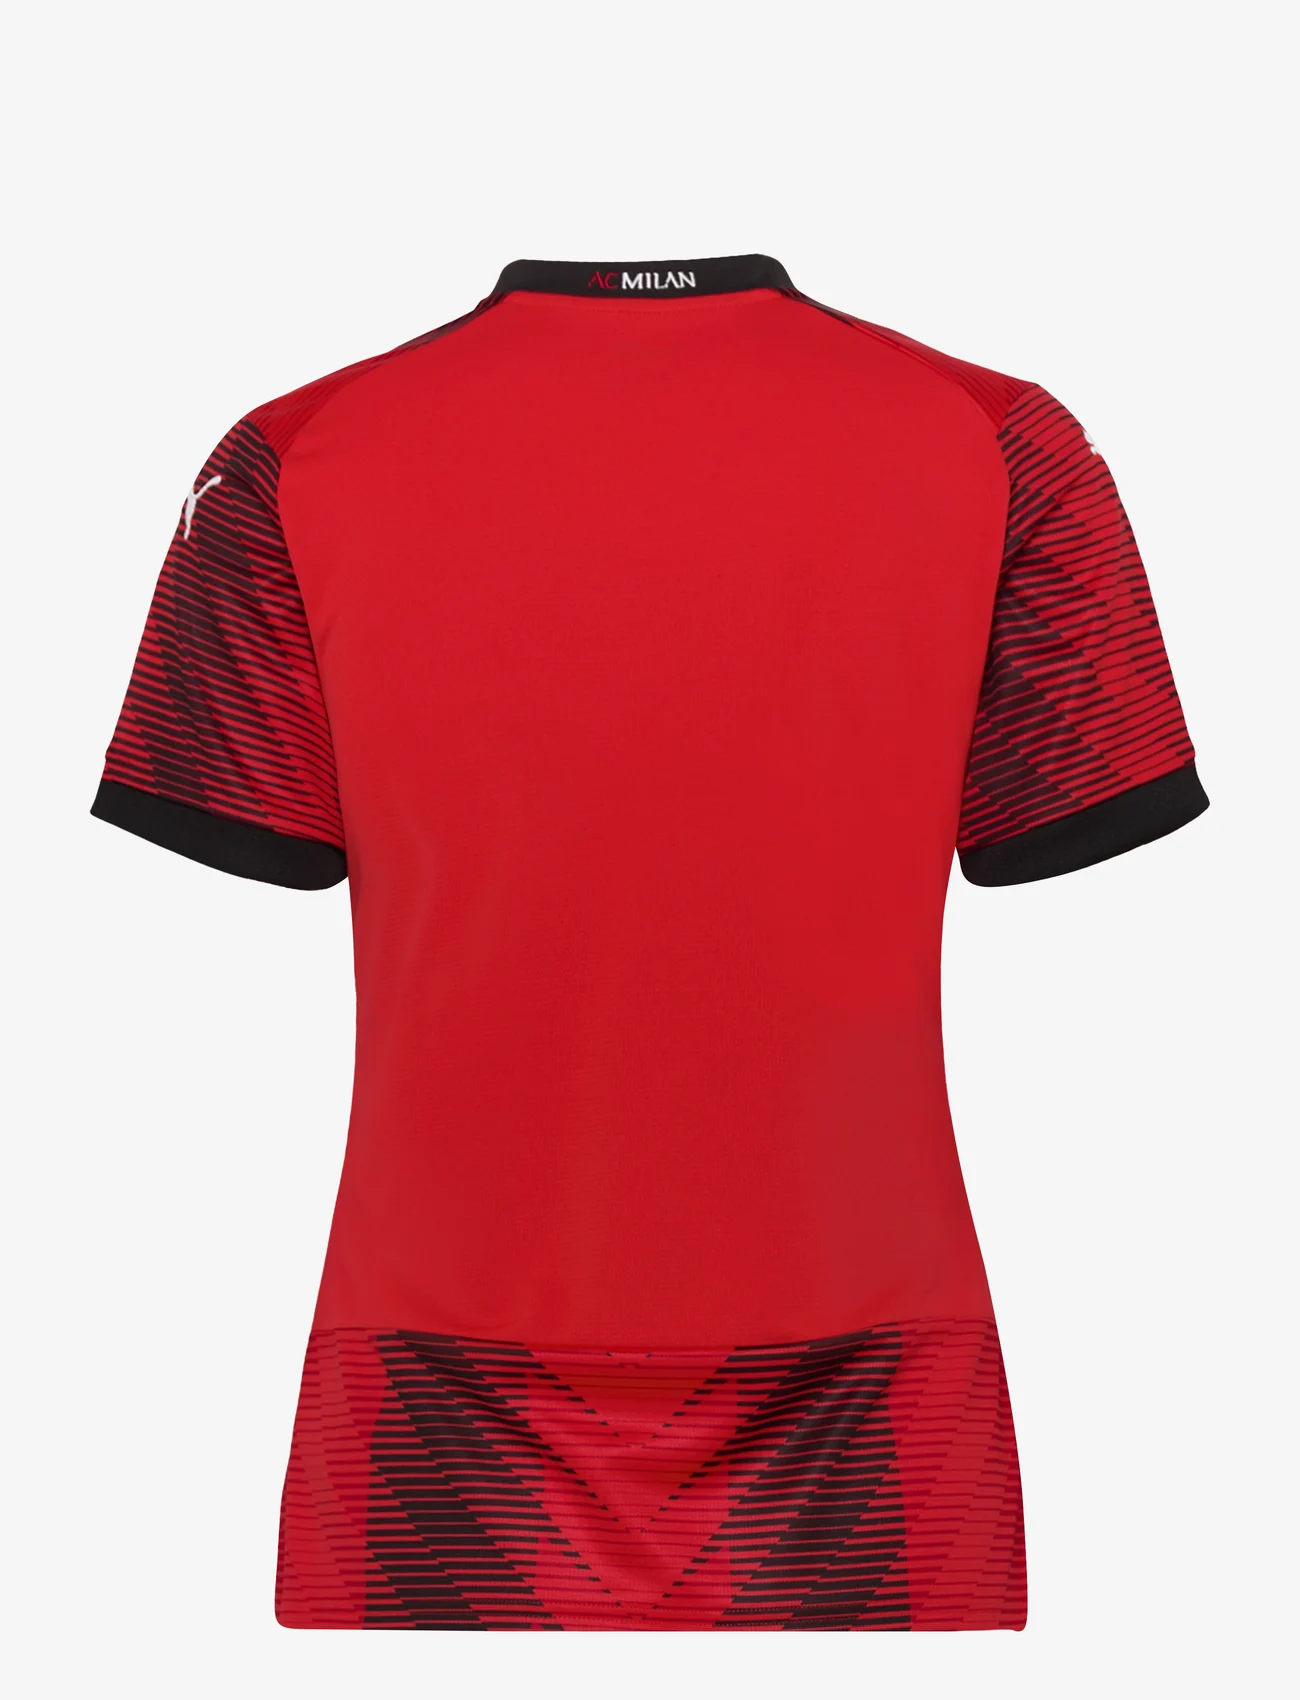 PUMA - ACM Home Jersey Replica W - t-shirts & tops - for all time red-puma black - 1